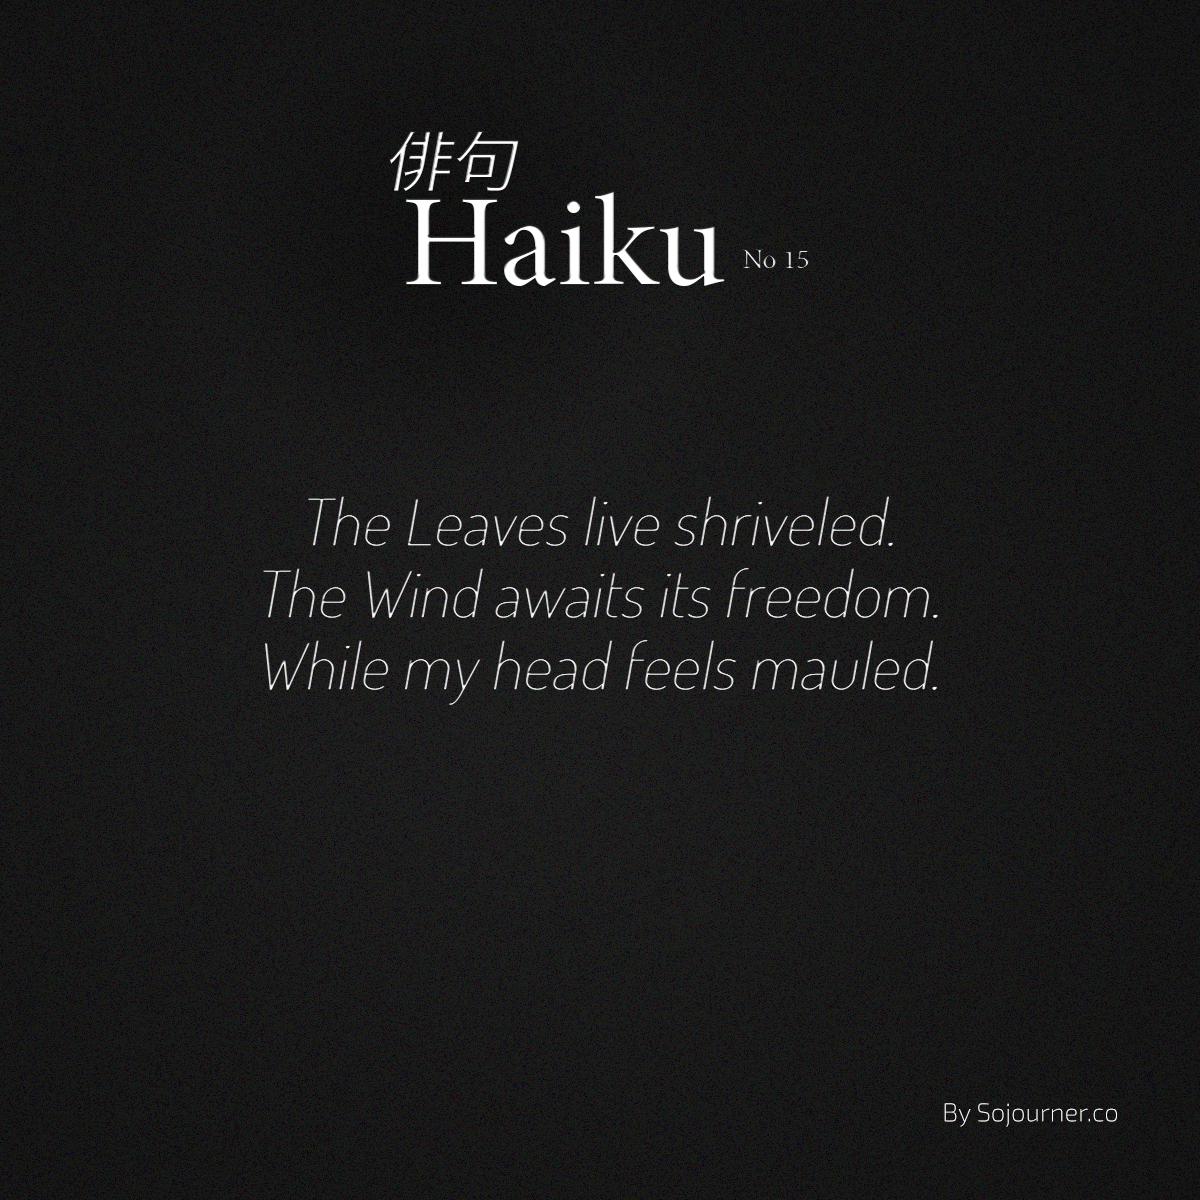 indefiniteloop.com - Haiku No. 15 - The Heat.